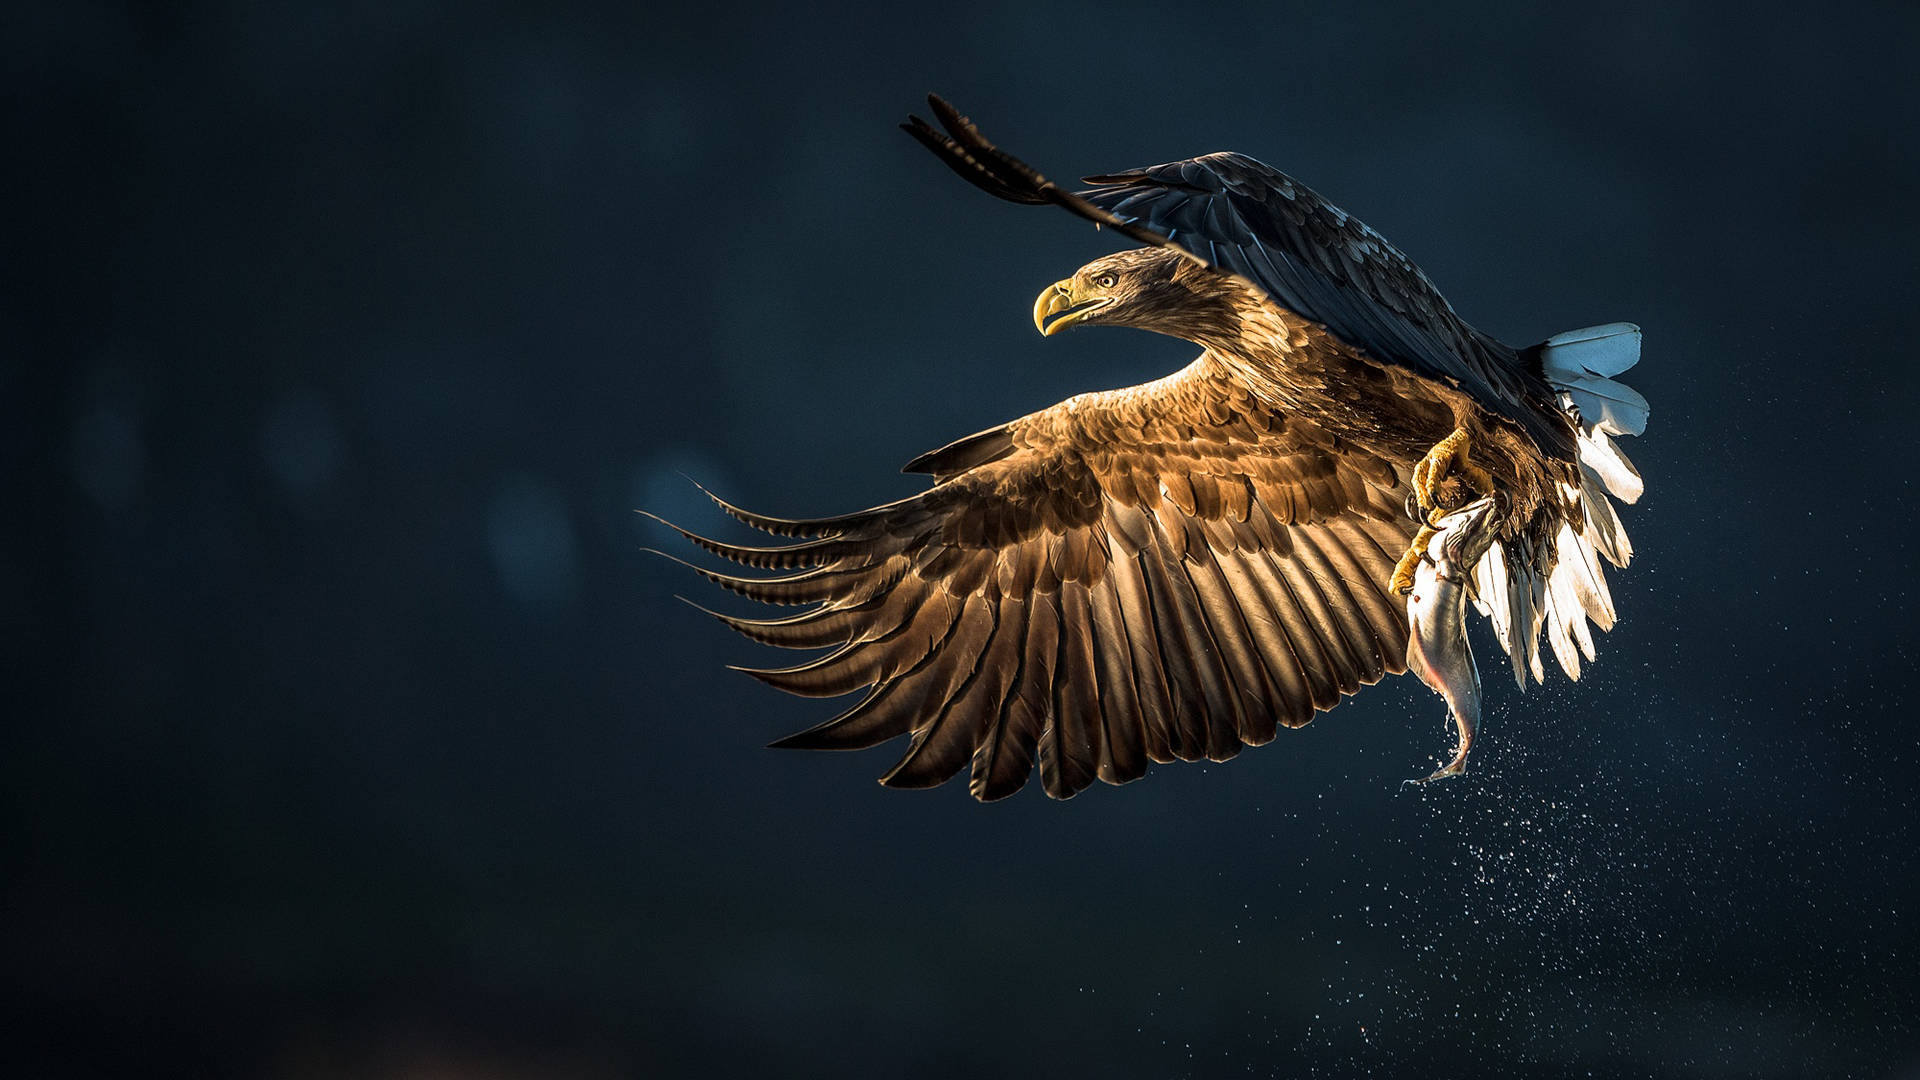 Eagle Mid-Flap During Flight Wallpaper